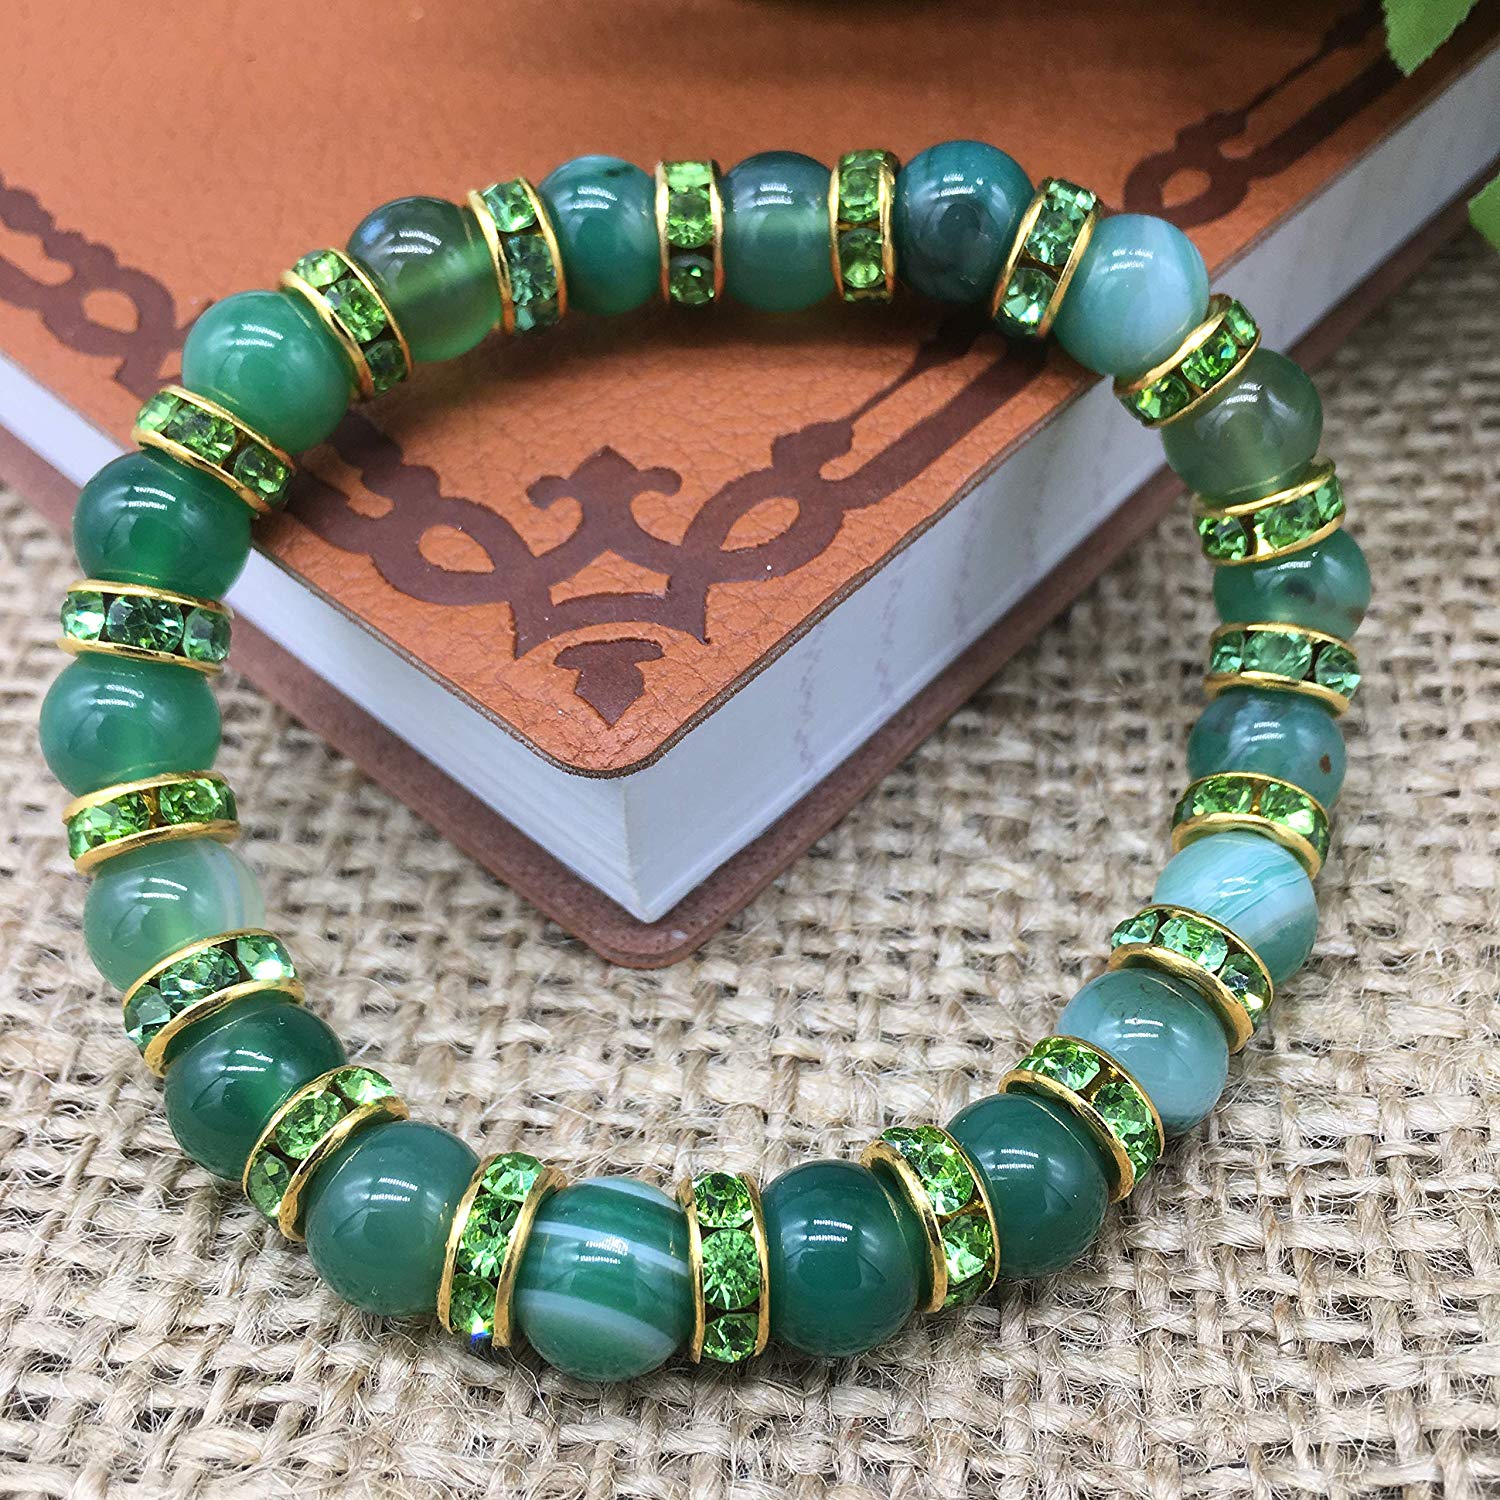 Ladies Spiritual Bracelet for Women- Gorgeous Green Natural Agate Beads &amp; Sparkling Rhinestone Crystals - Woman&#39;s Spiritual Balance Bracelet with Jewellery Gift Box - Gemstones